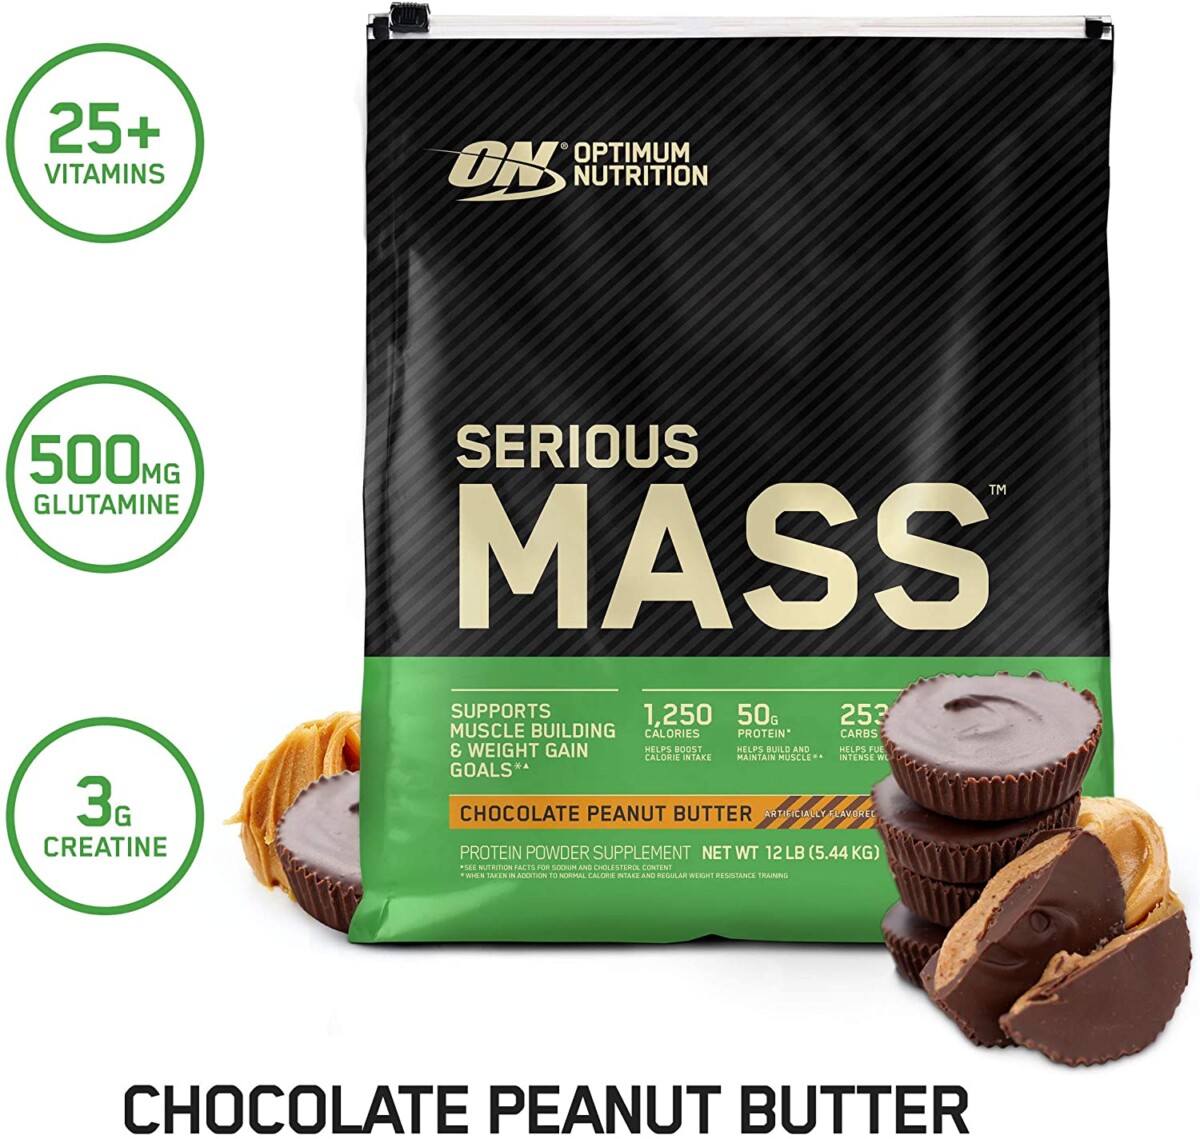 Alea's Deals OPTIMUM NUTRITION Serious Mass Weight Gainer Protein Powder  – ON SALE➕SUB/SAVE!  